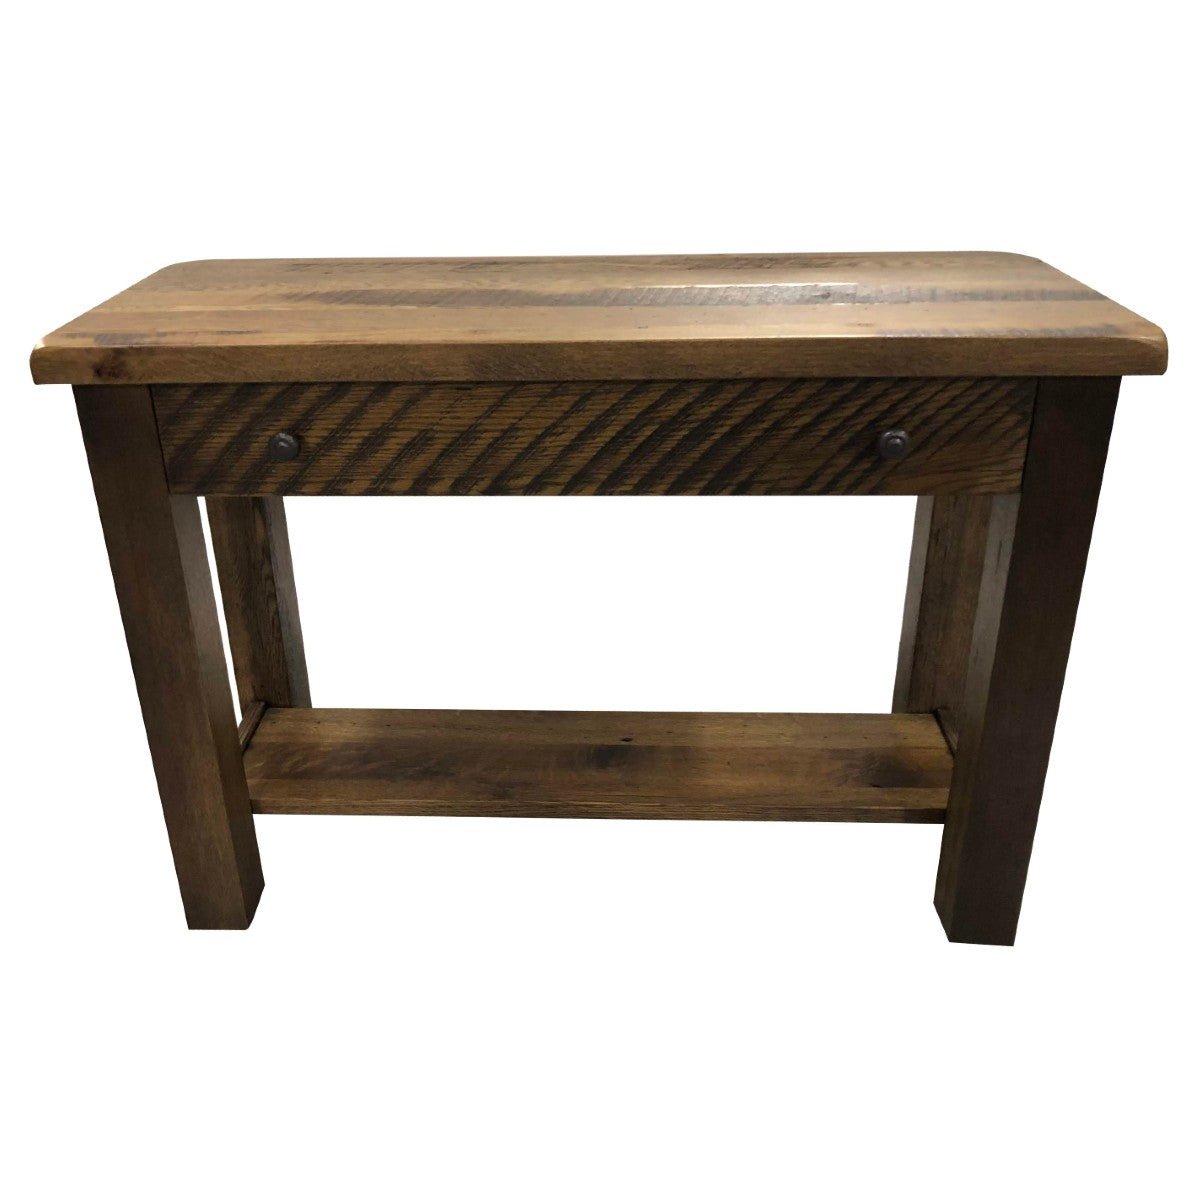 Rustic Sofa Table in Reclaimed Wood